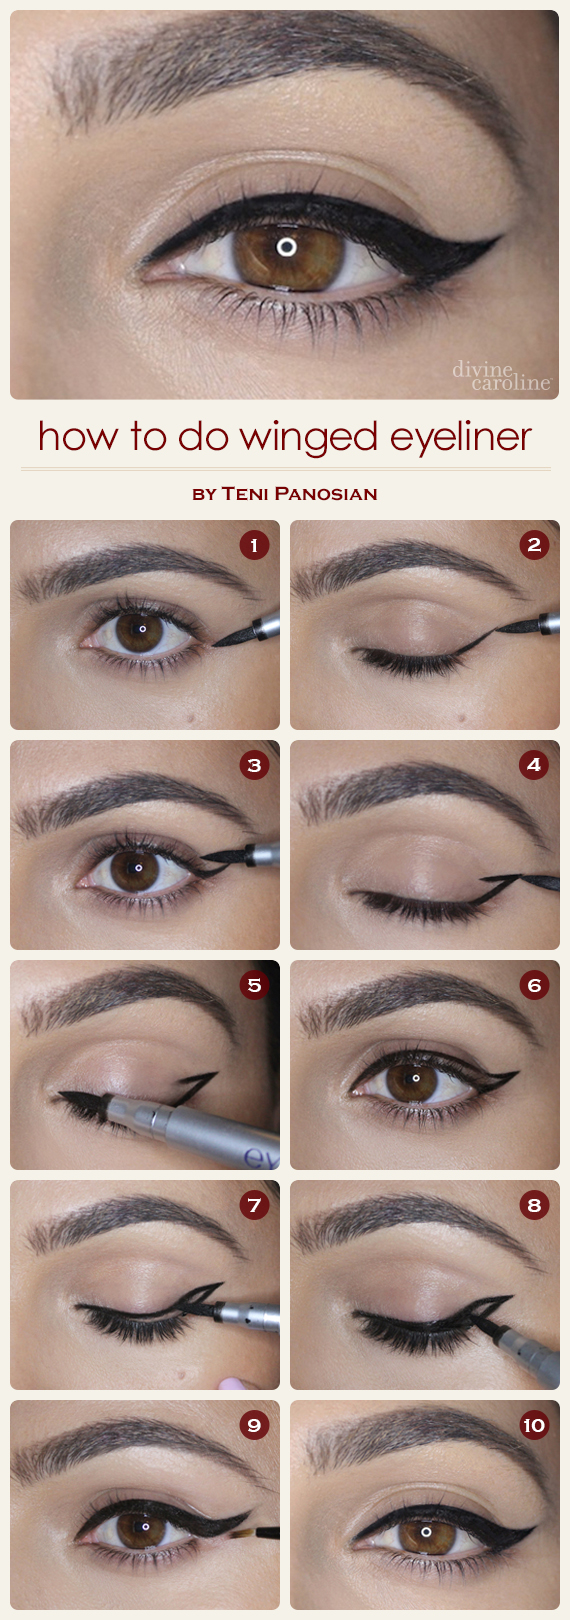 the easiest way to do eyeliner *VERY IN DEPTH* 